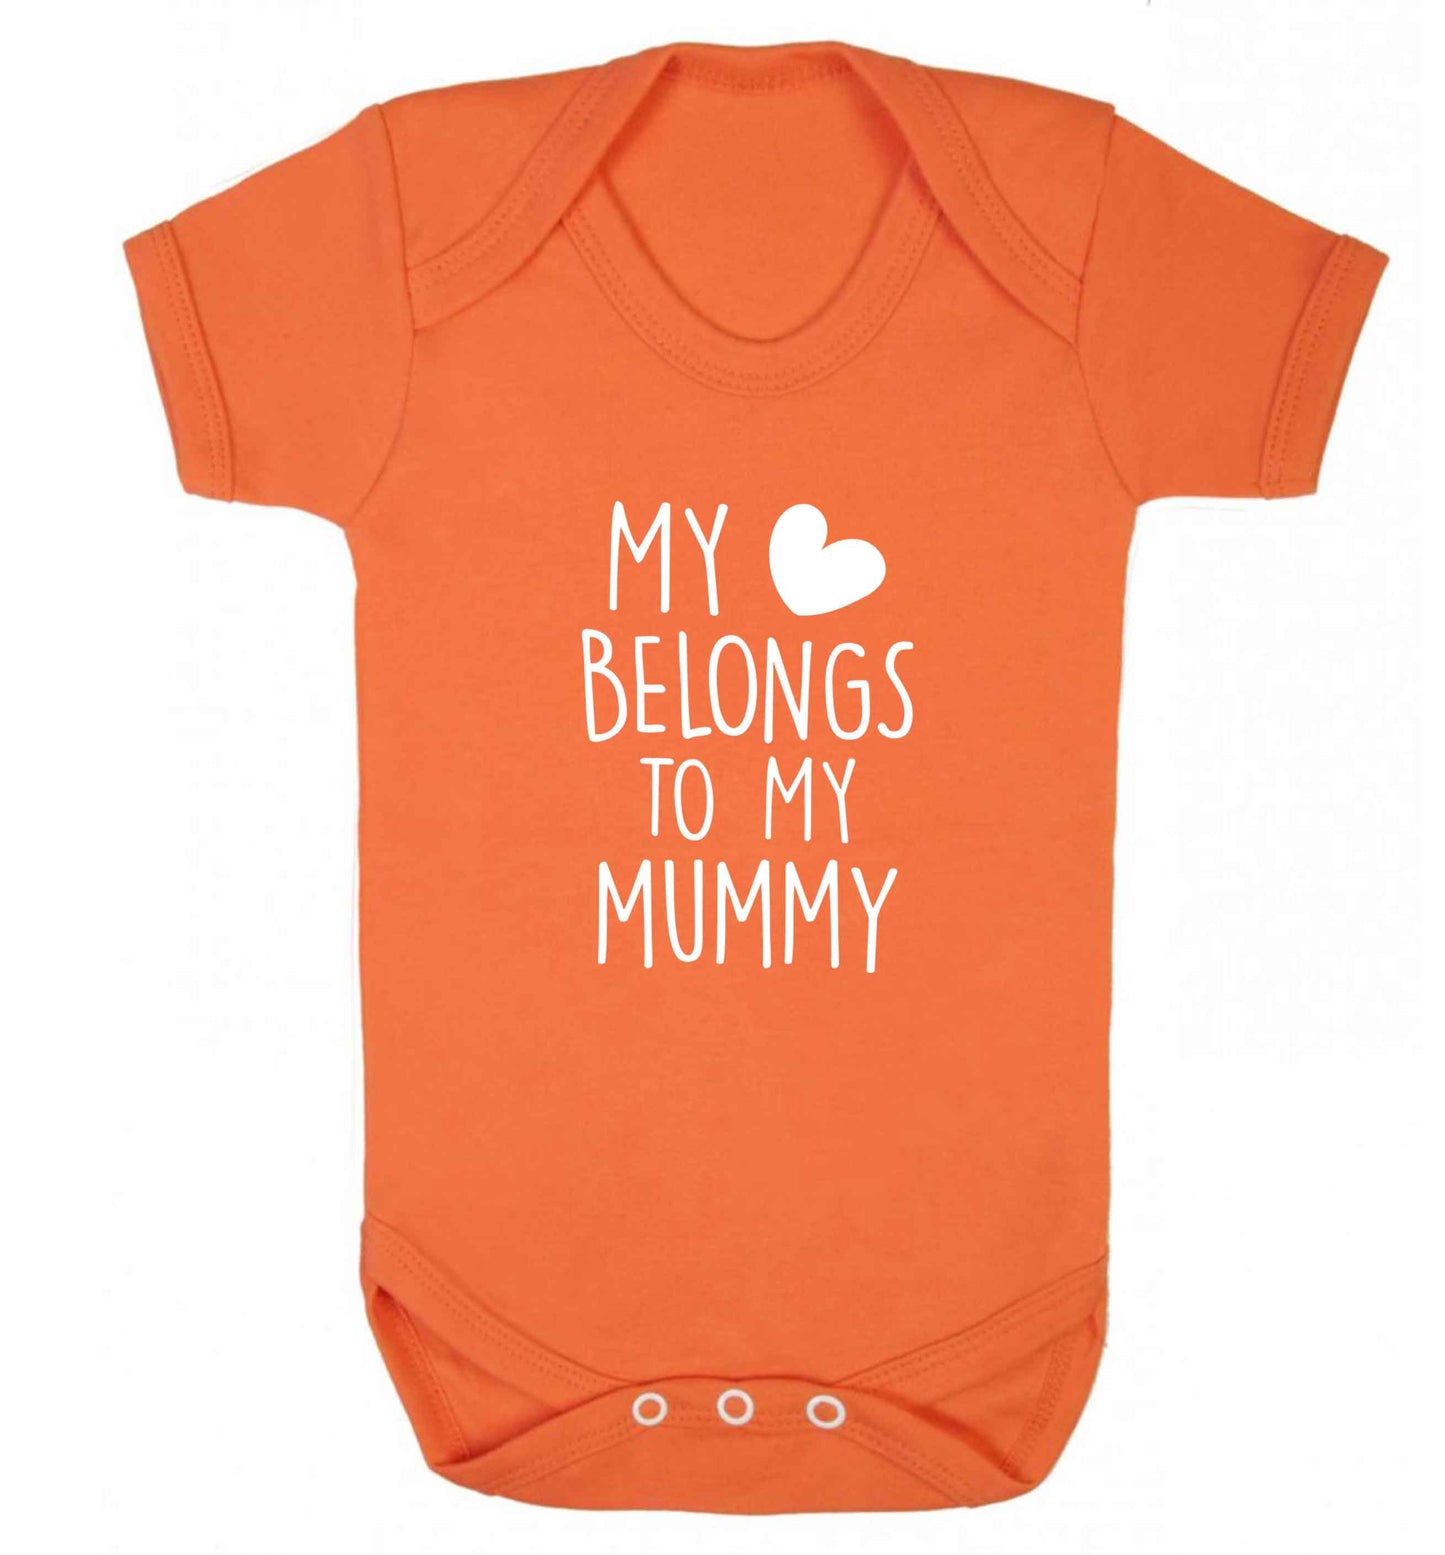 My heart belongs to my mummy baby vest orange 18-24 months